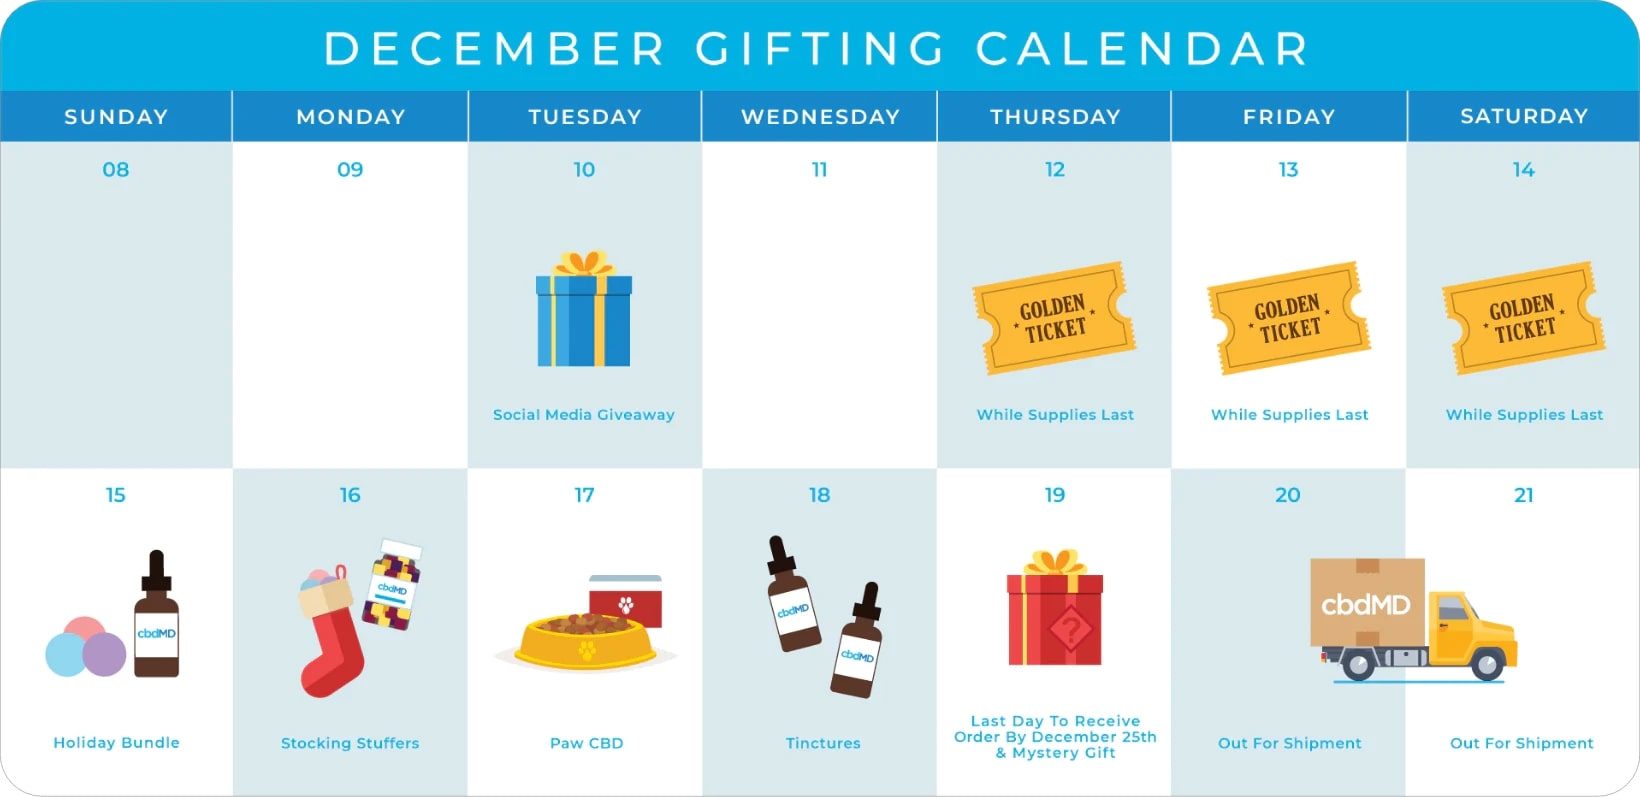 December Gifting Calendar